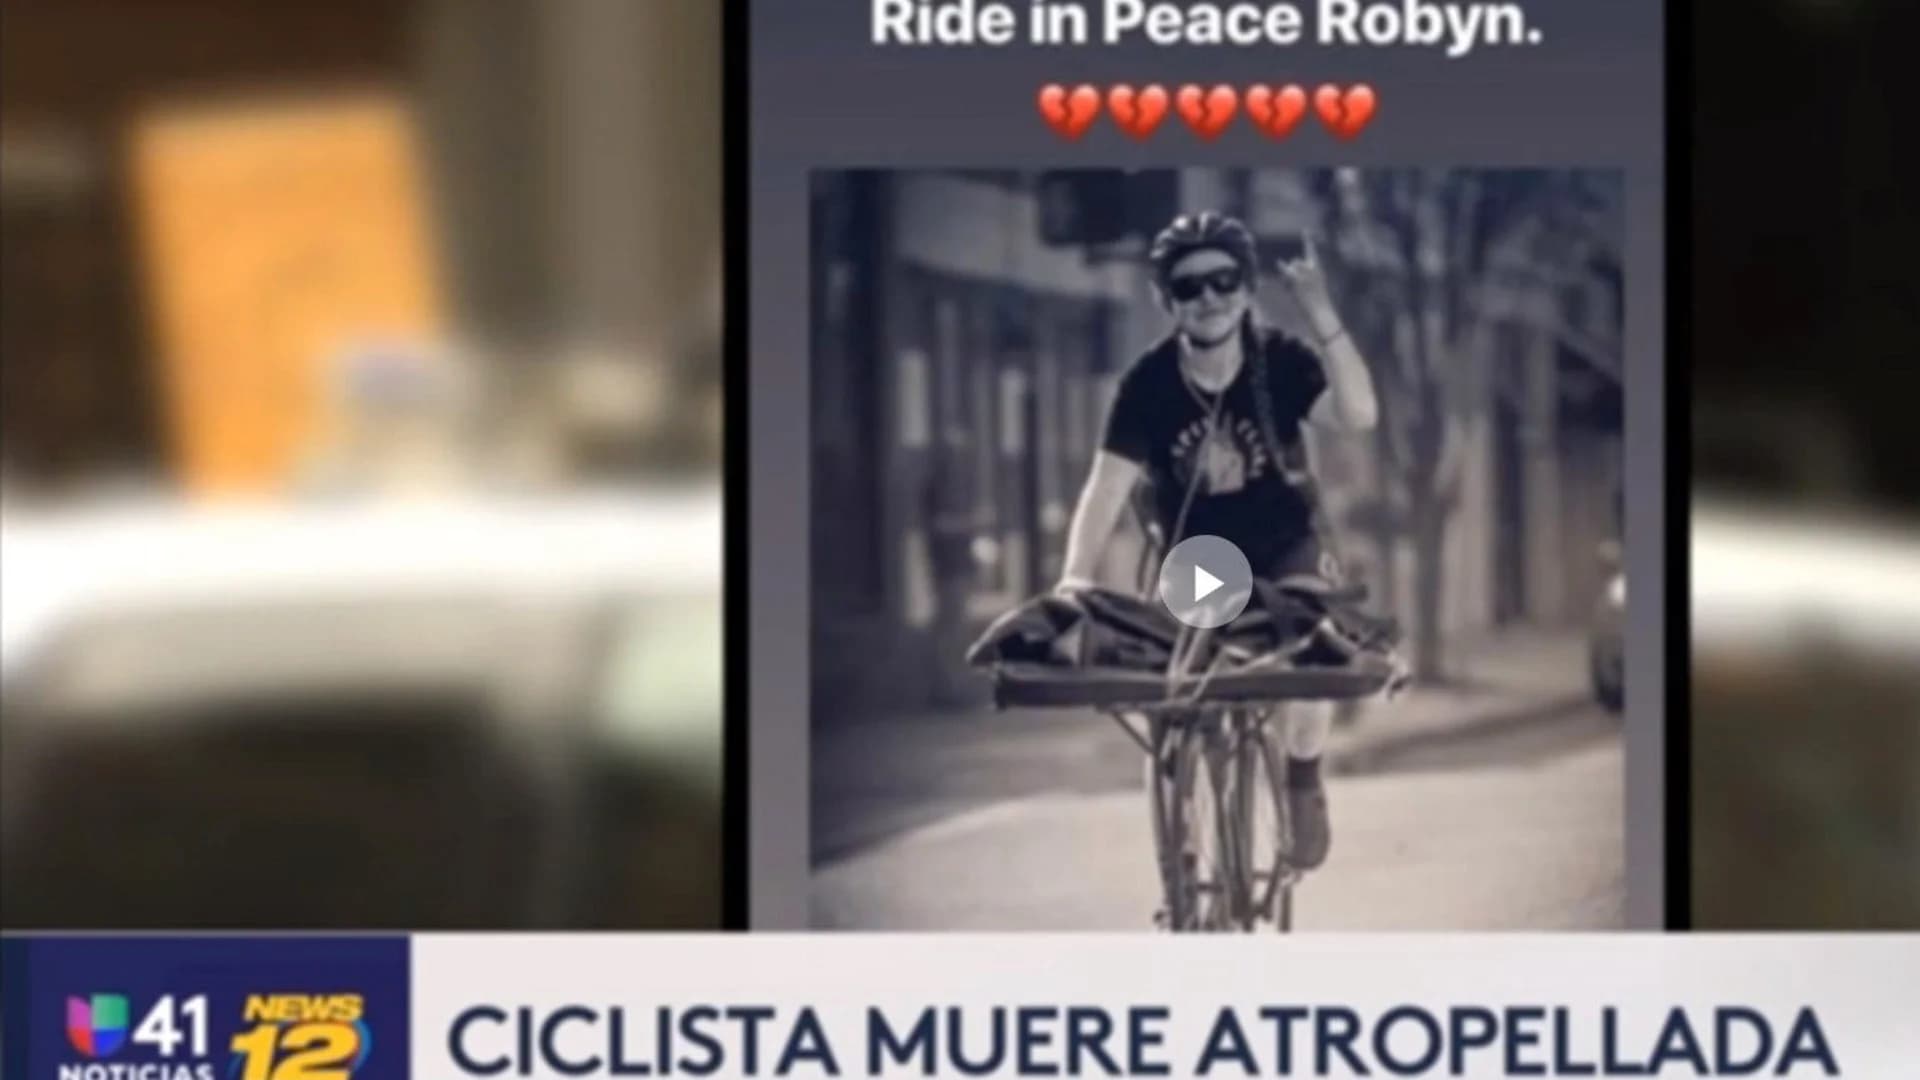 Univision 41 News Brief: Ciclista muere atropellada en Manhattan